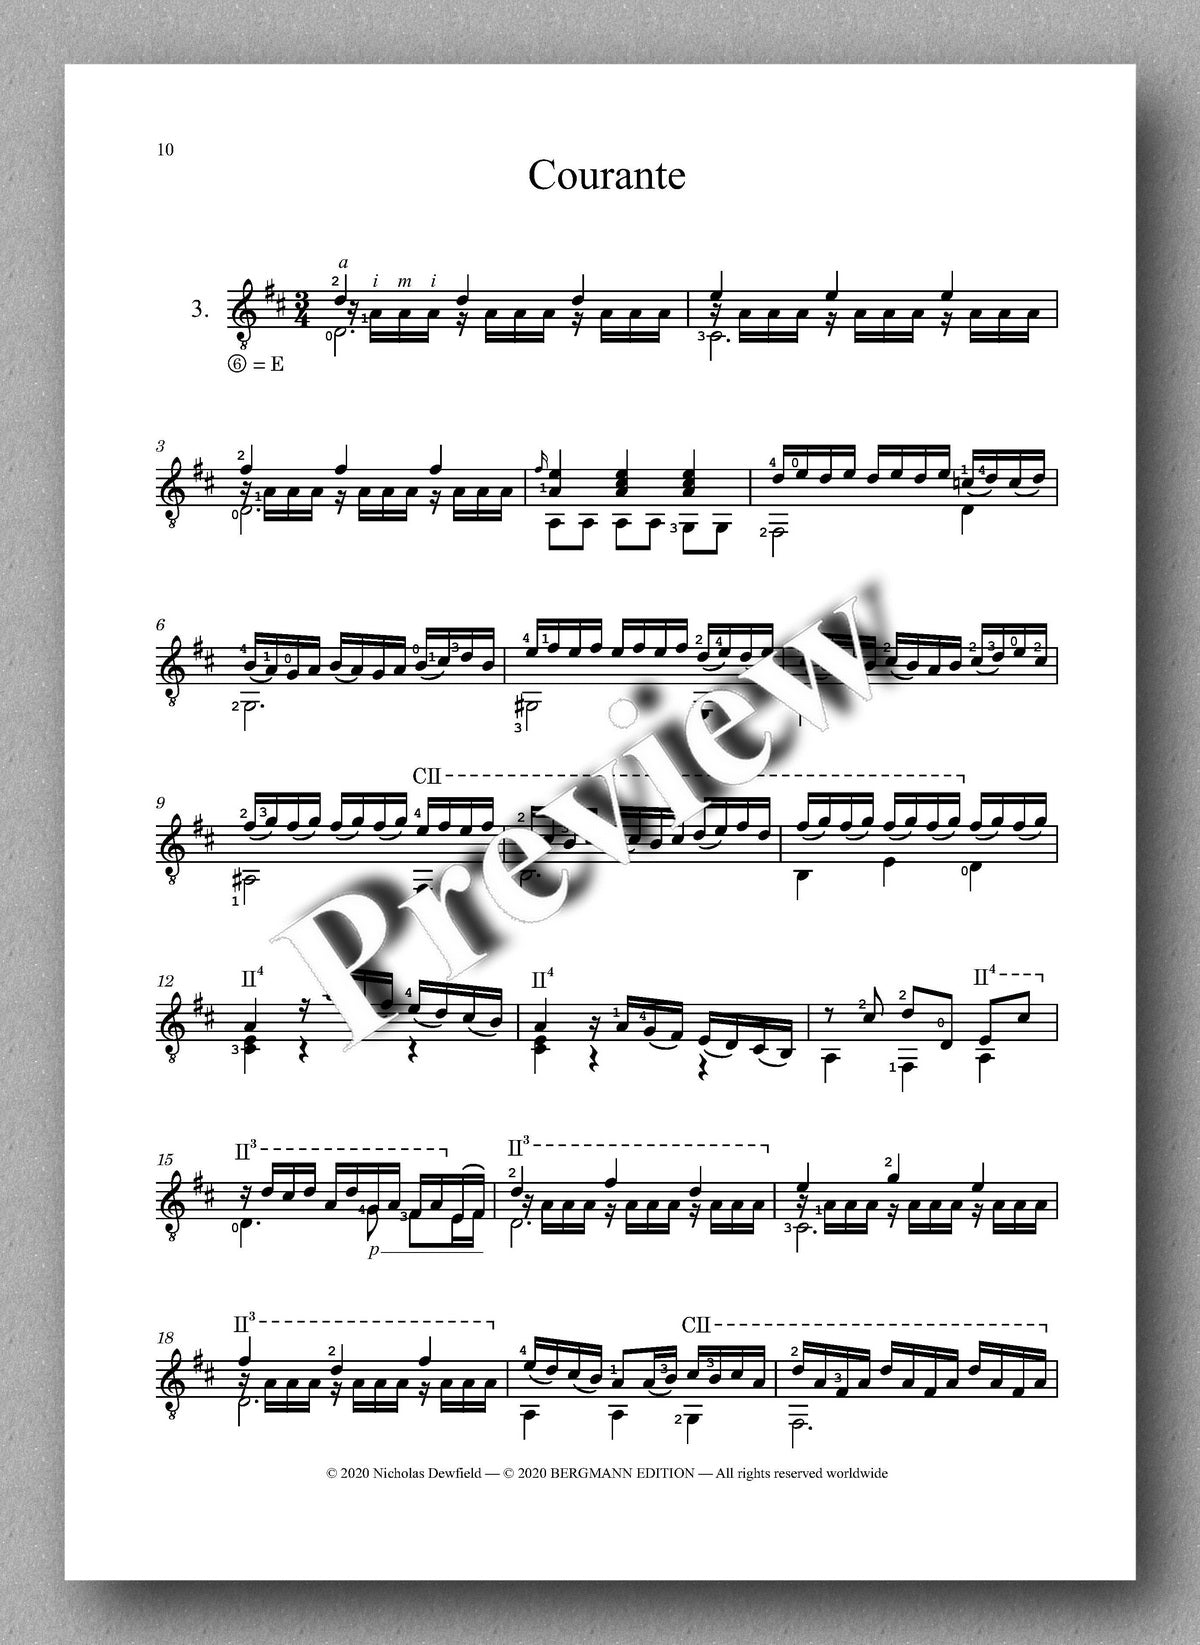 Weiss-Dewfield, Sonata No. 2 - courante